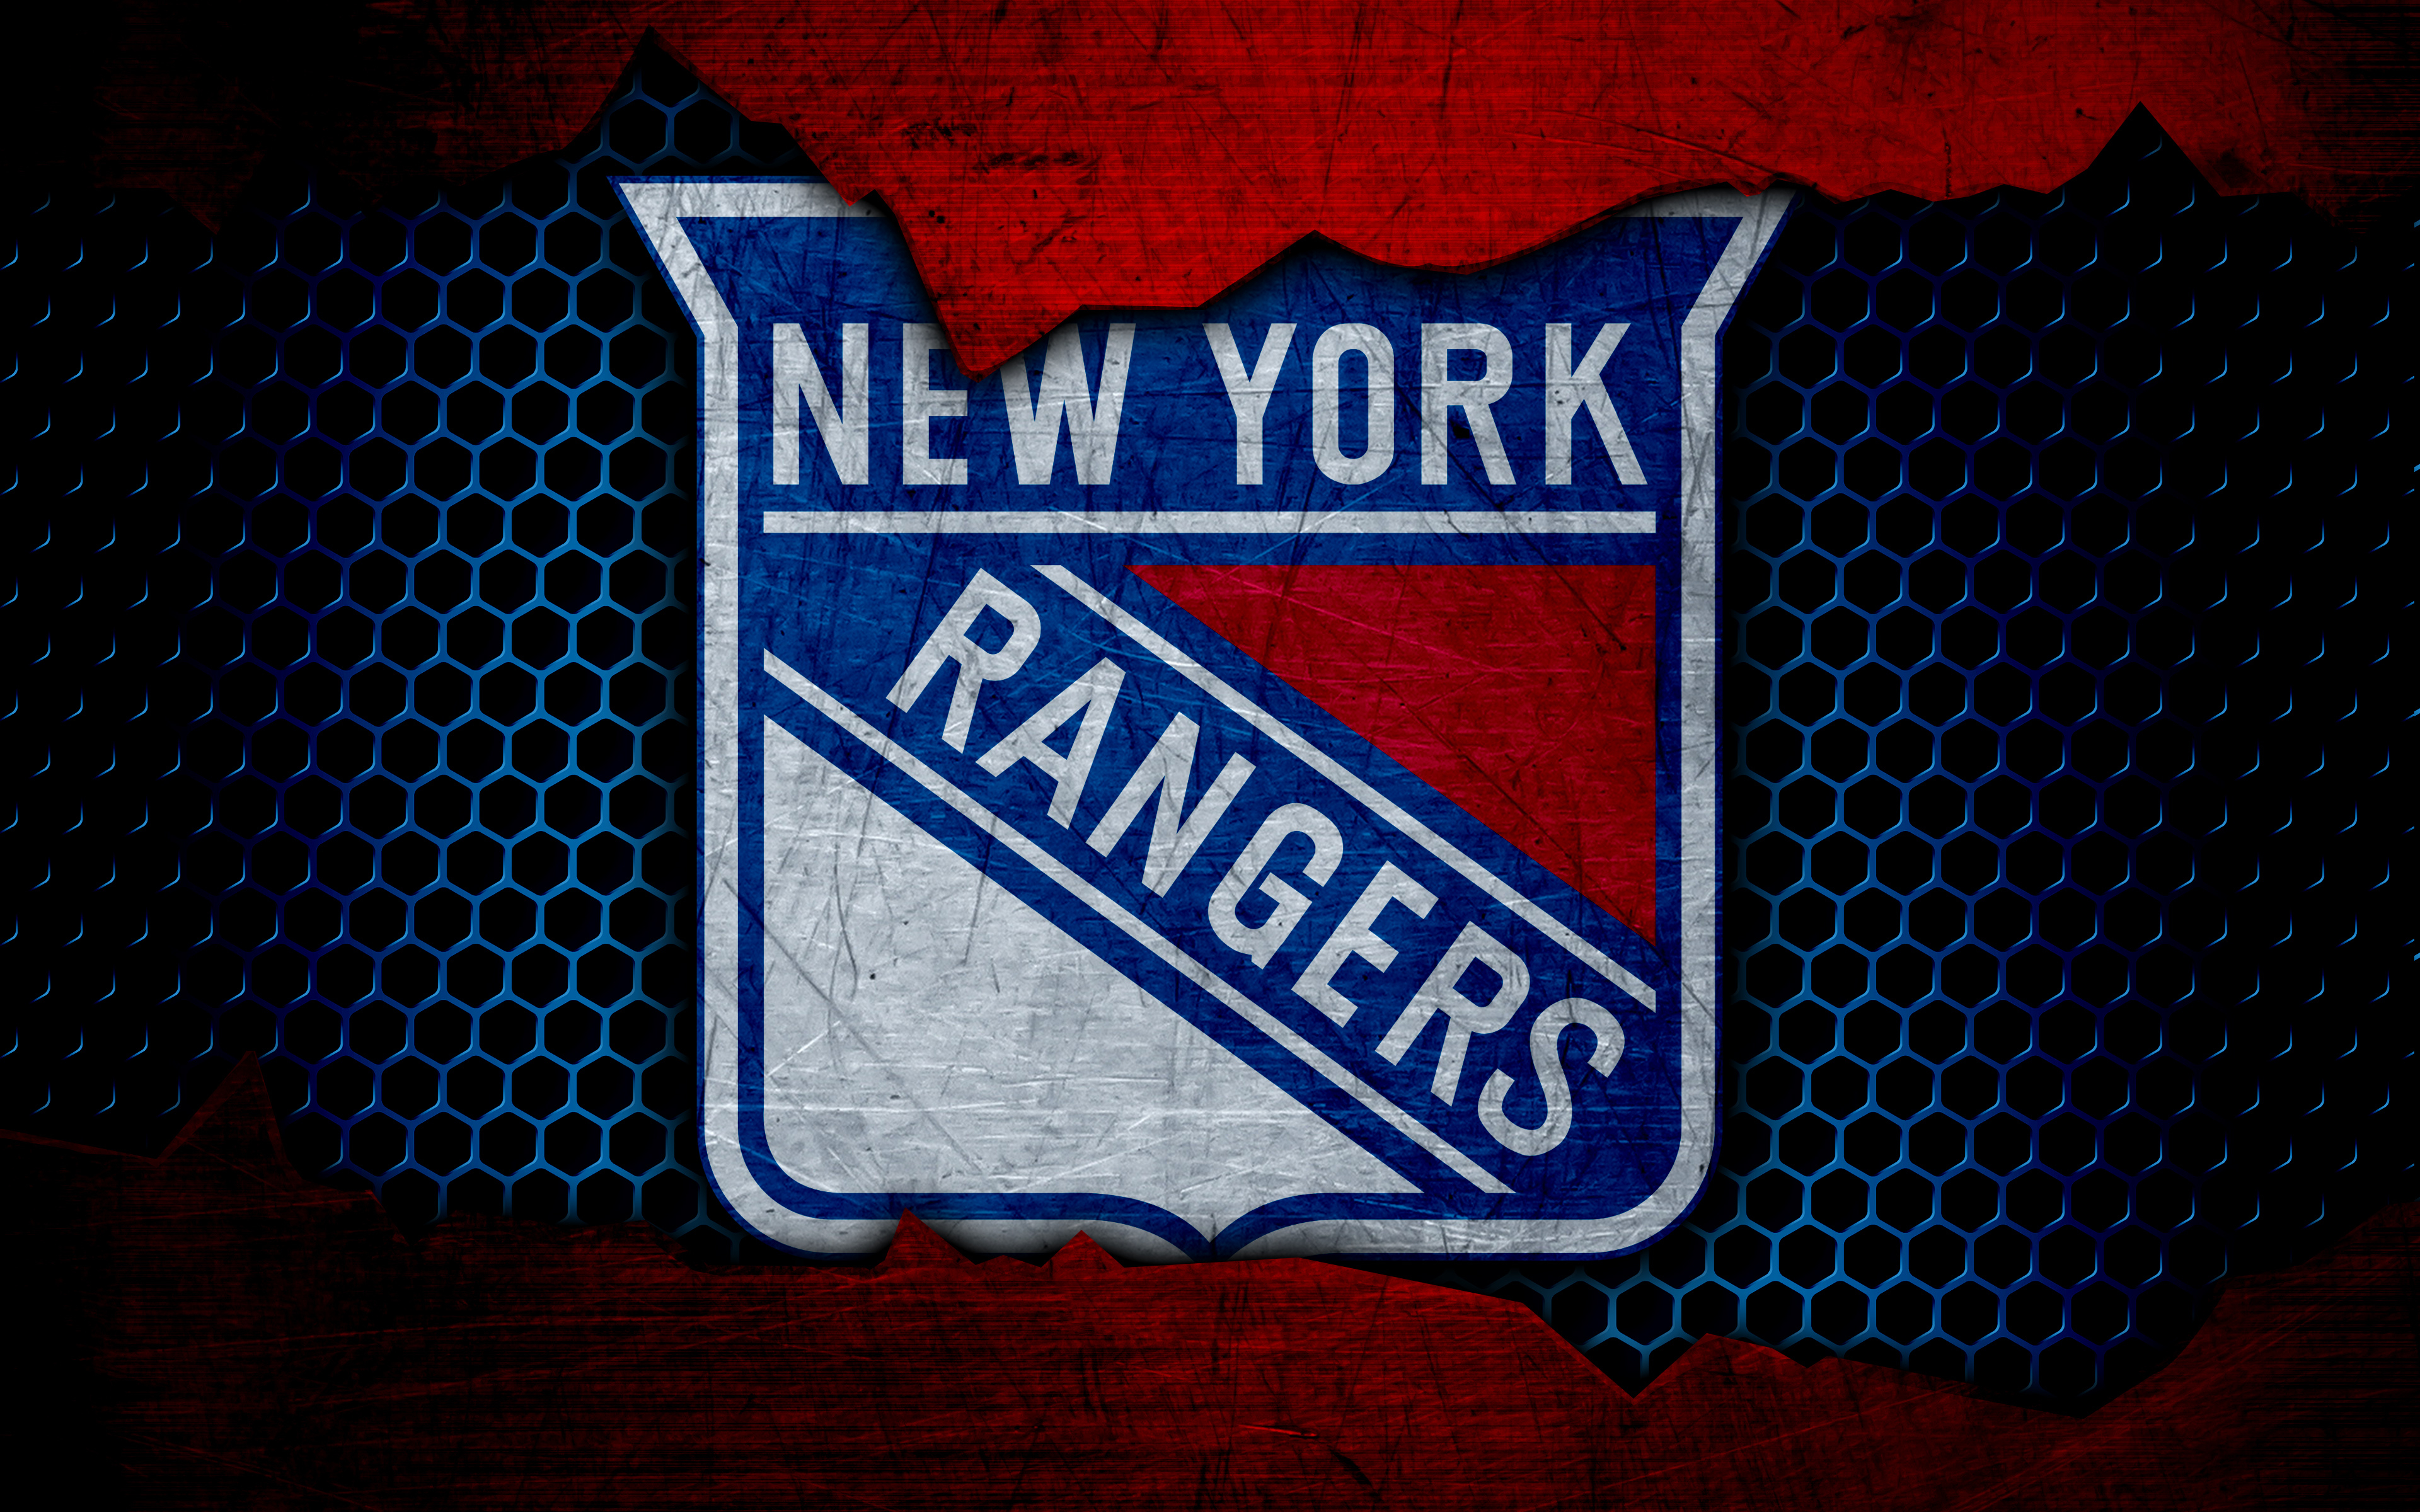 New York Rangers Wallpapers - Top Free New York Rangers